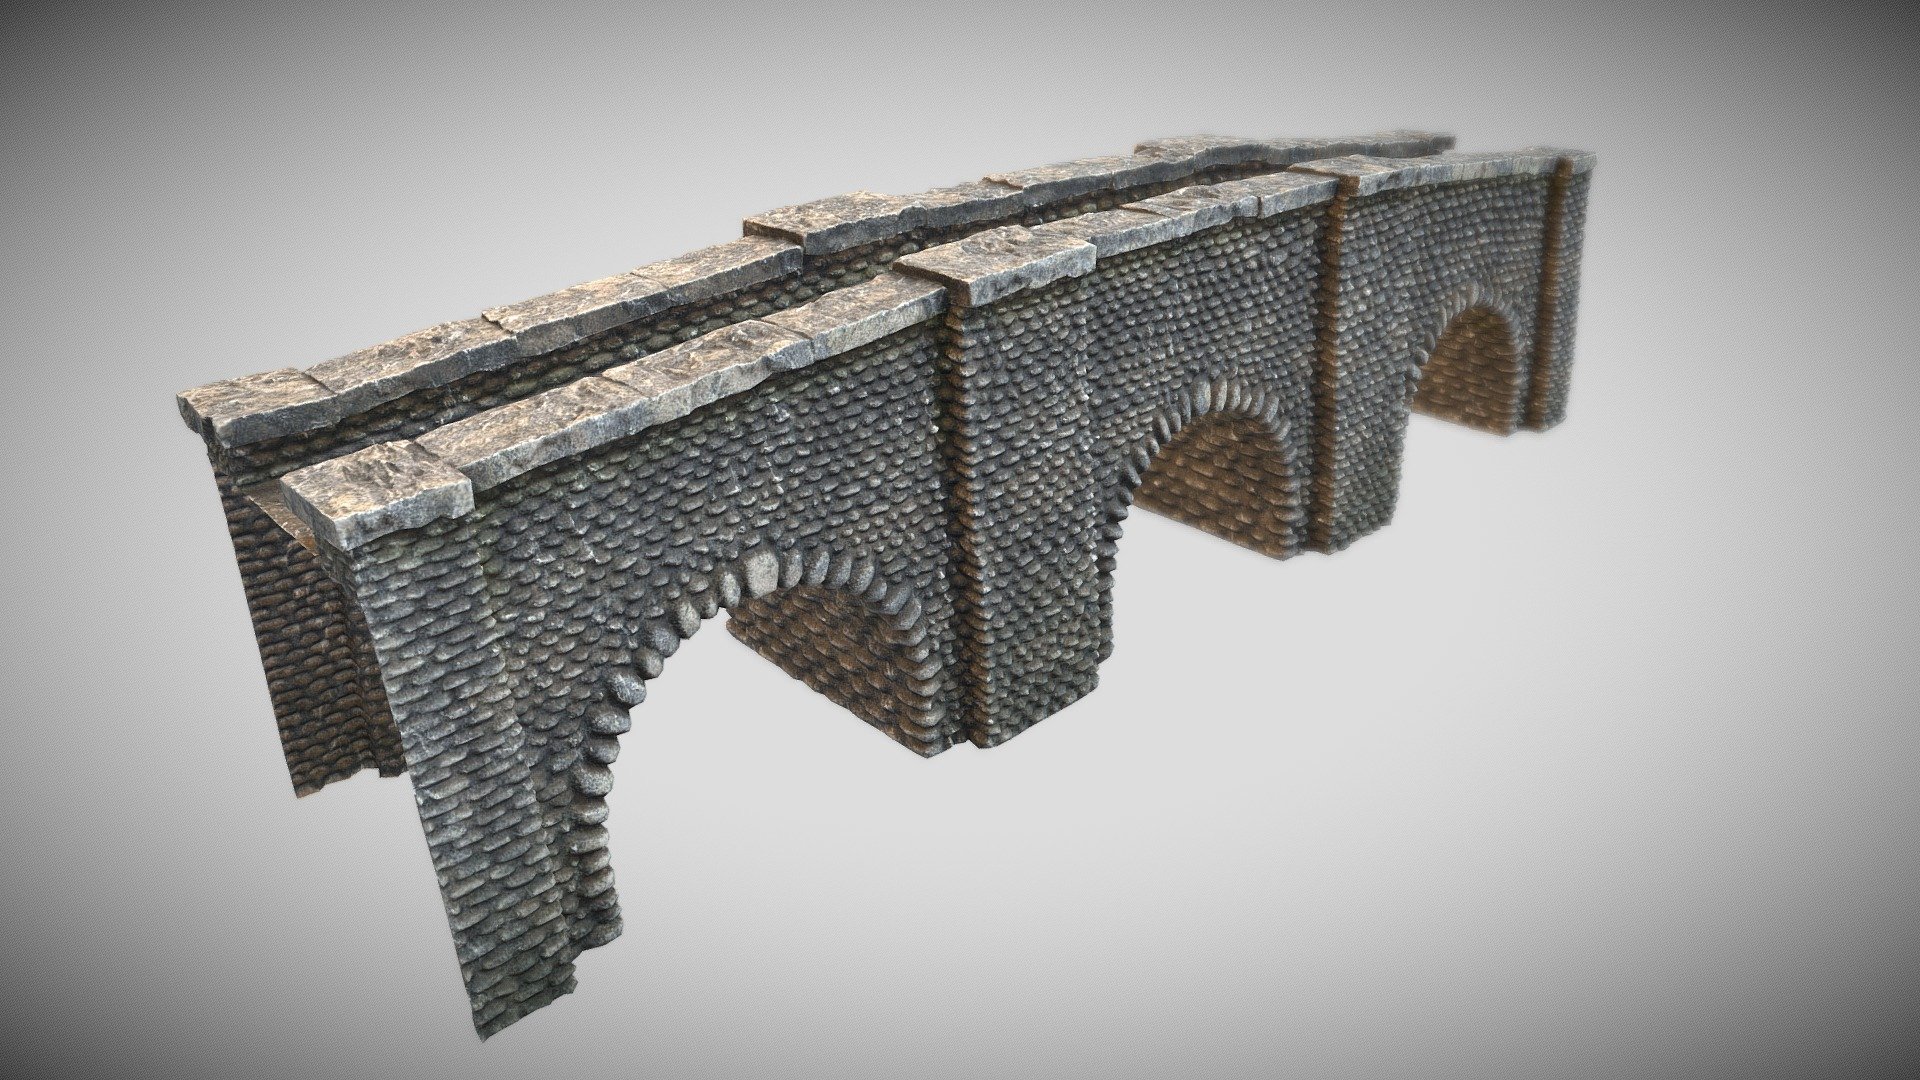 The &ldquo;Large Medieval Bridge Low-Poly Stone Game Asset,